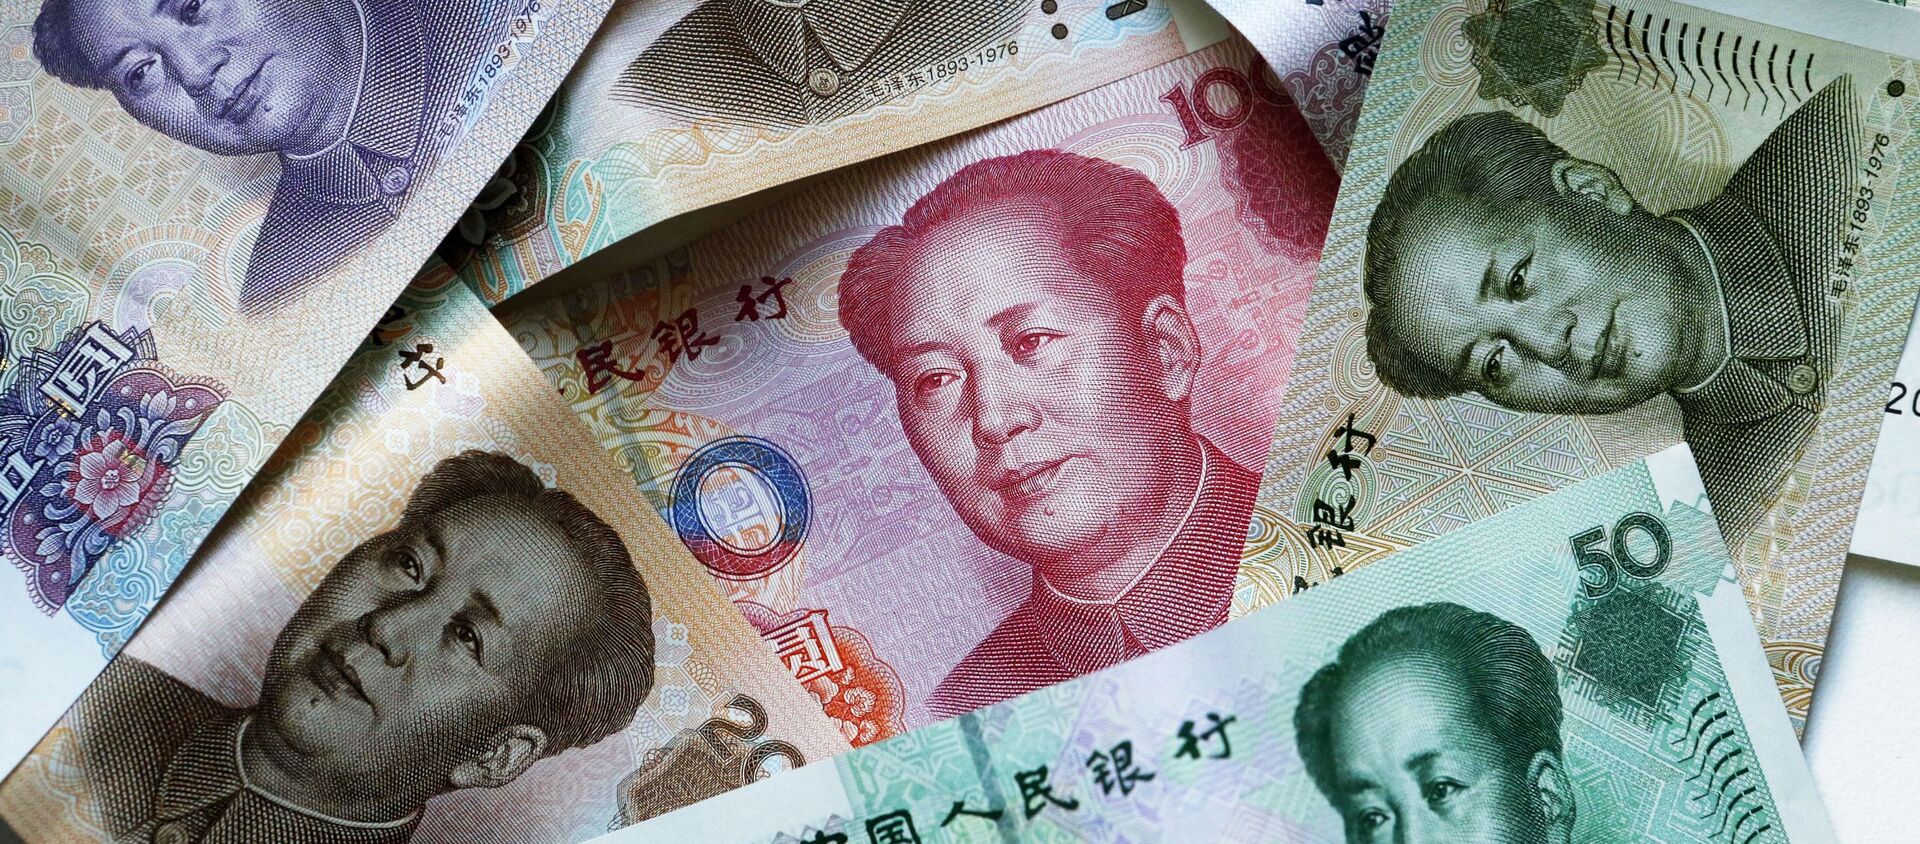 Billetes de yuanes, moneda china - Sputnik Mundo, 1920, 18.01.2021